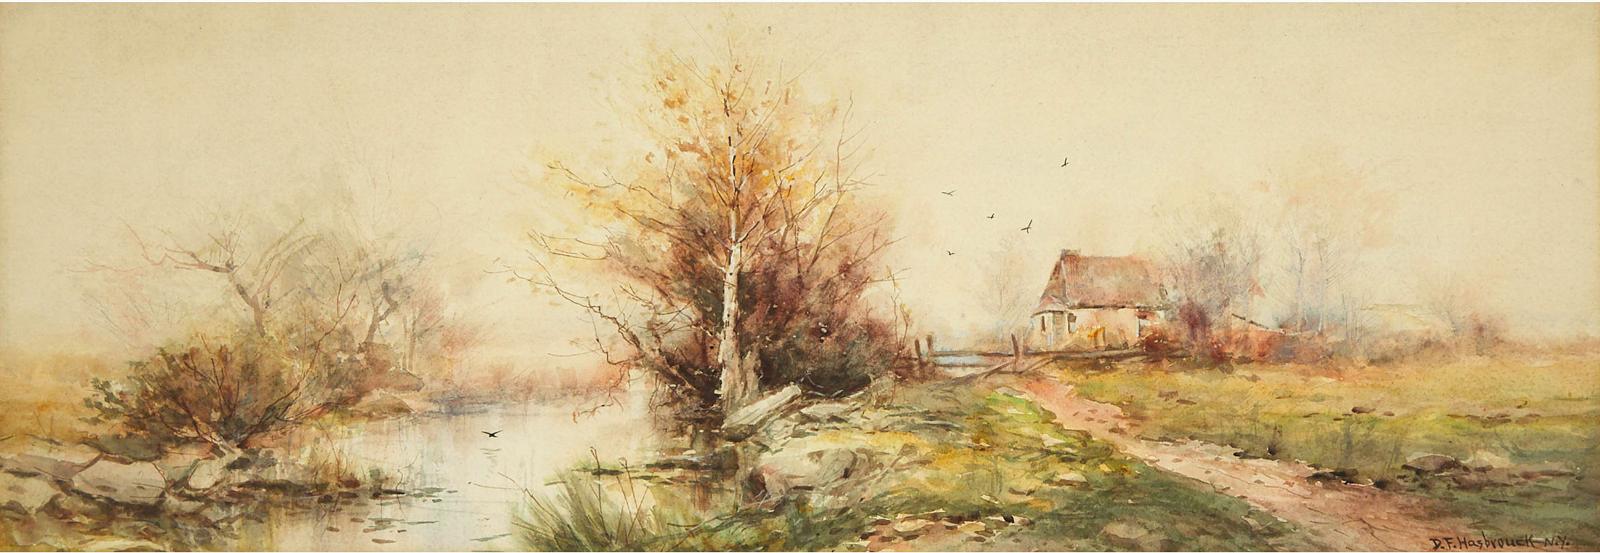 Dubois Fenelon Hasbrouck (1860-1934) - Upstate New York Cabin On The River